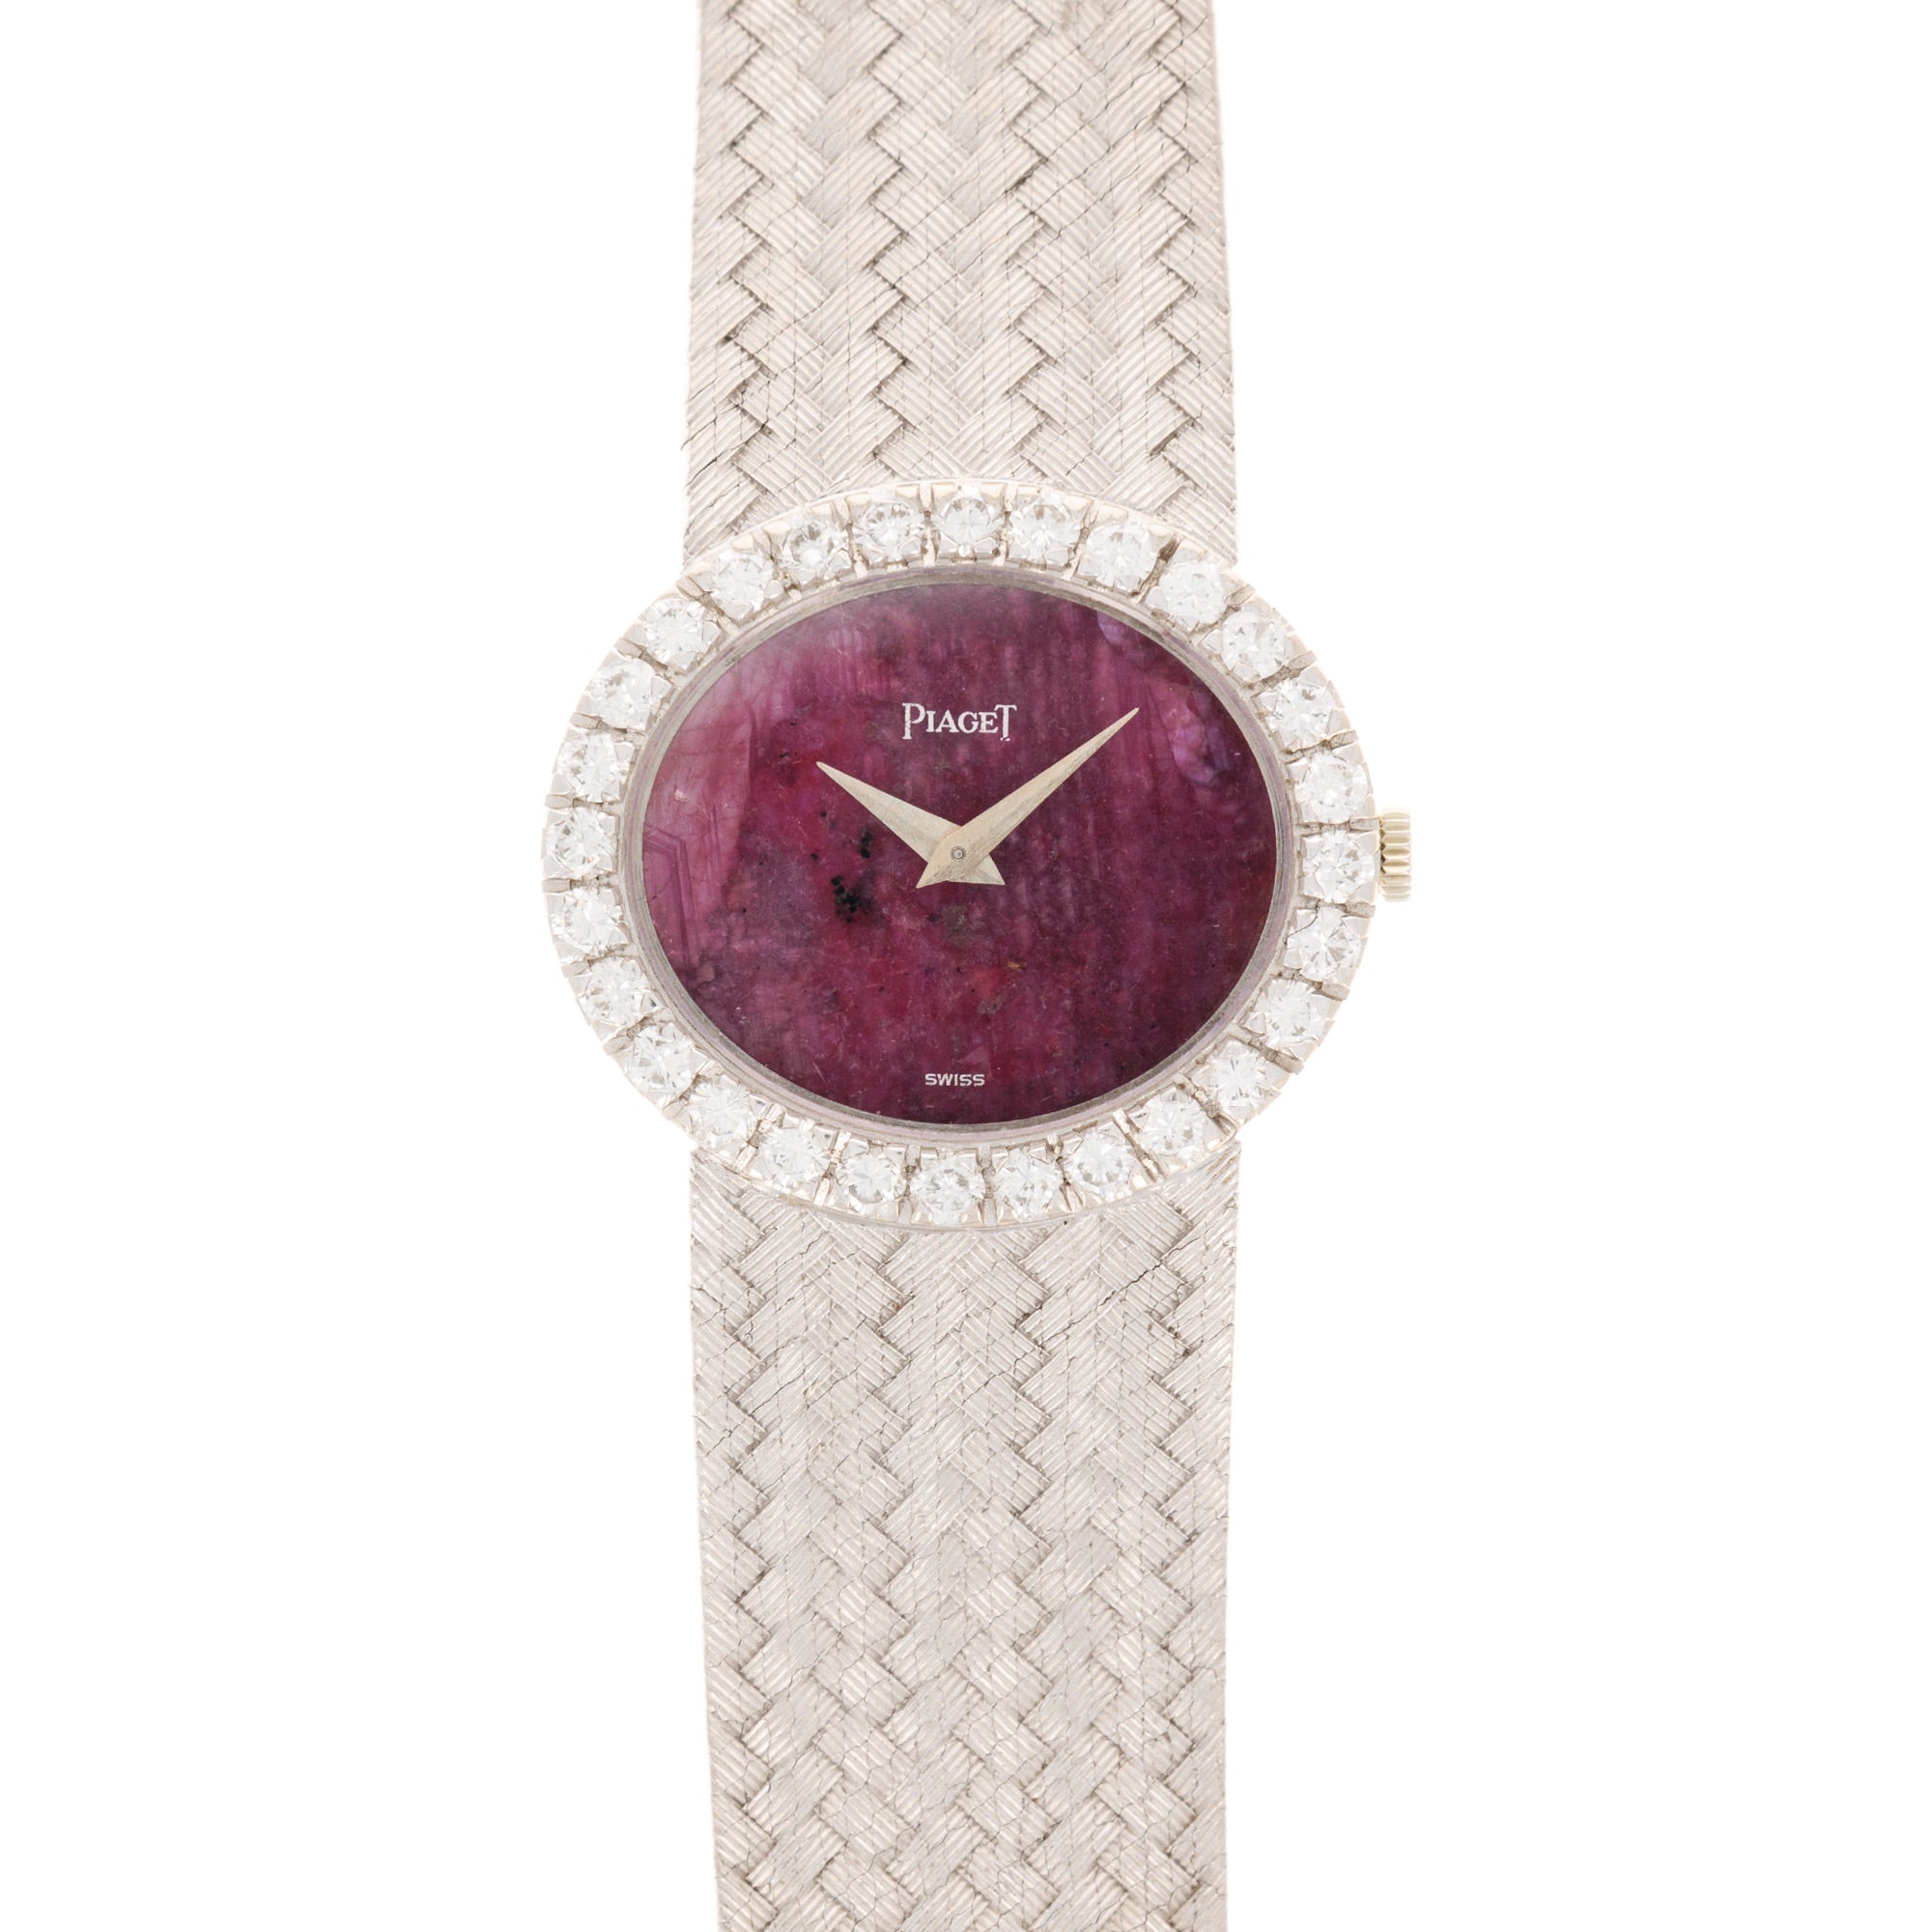 Piaget - Piaget White Gold Rubelite Diamond Watch Ref. 9804 - The Keystone Watches